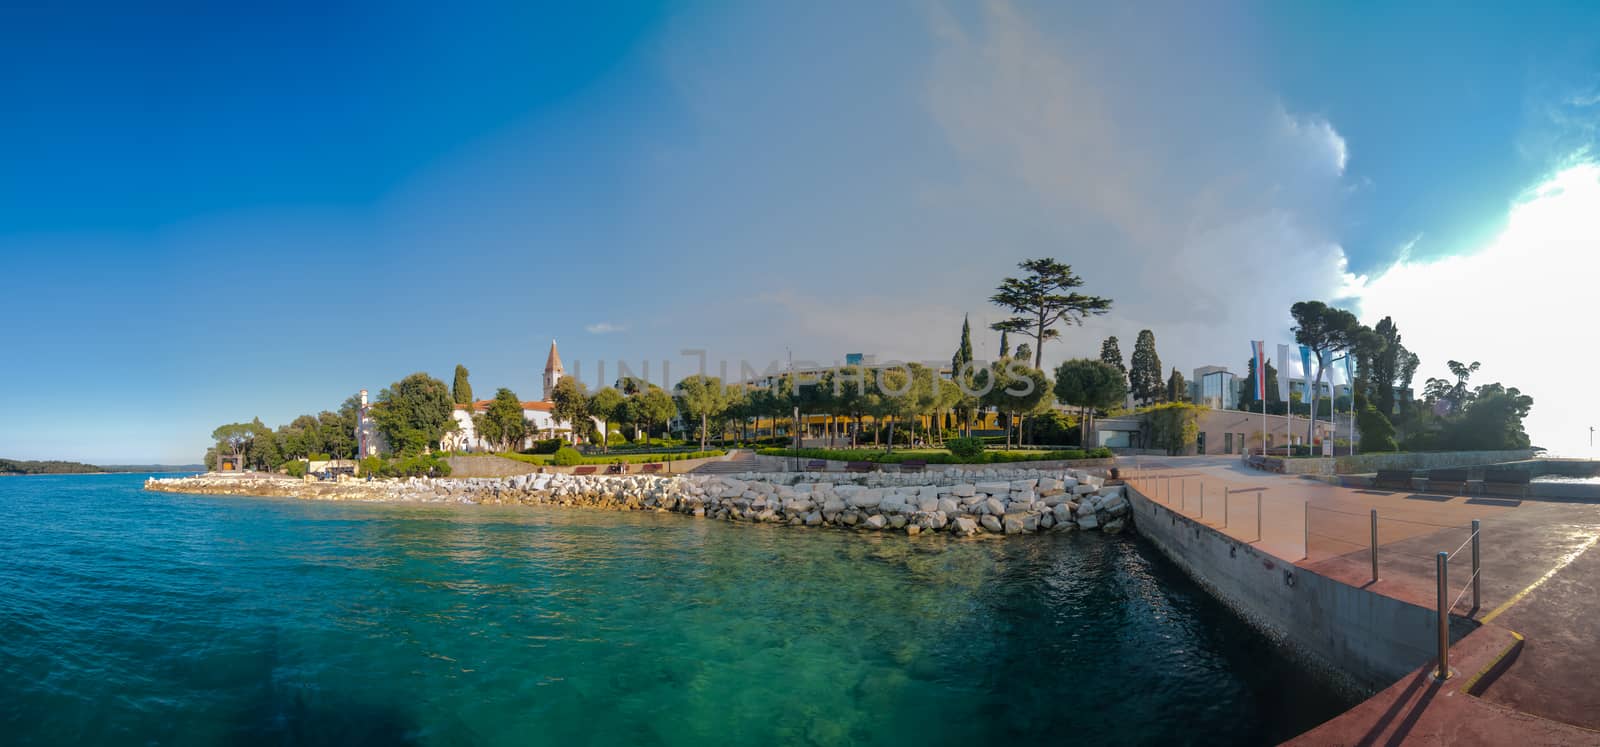 Sveti Andrija island, also Red island near Rovinj, Croatia, popular tourist resort in Adriatic